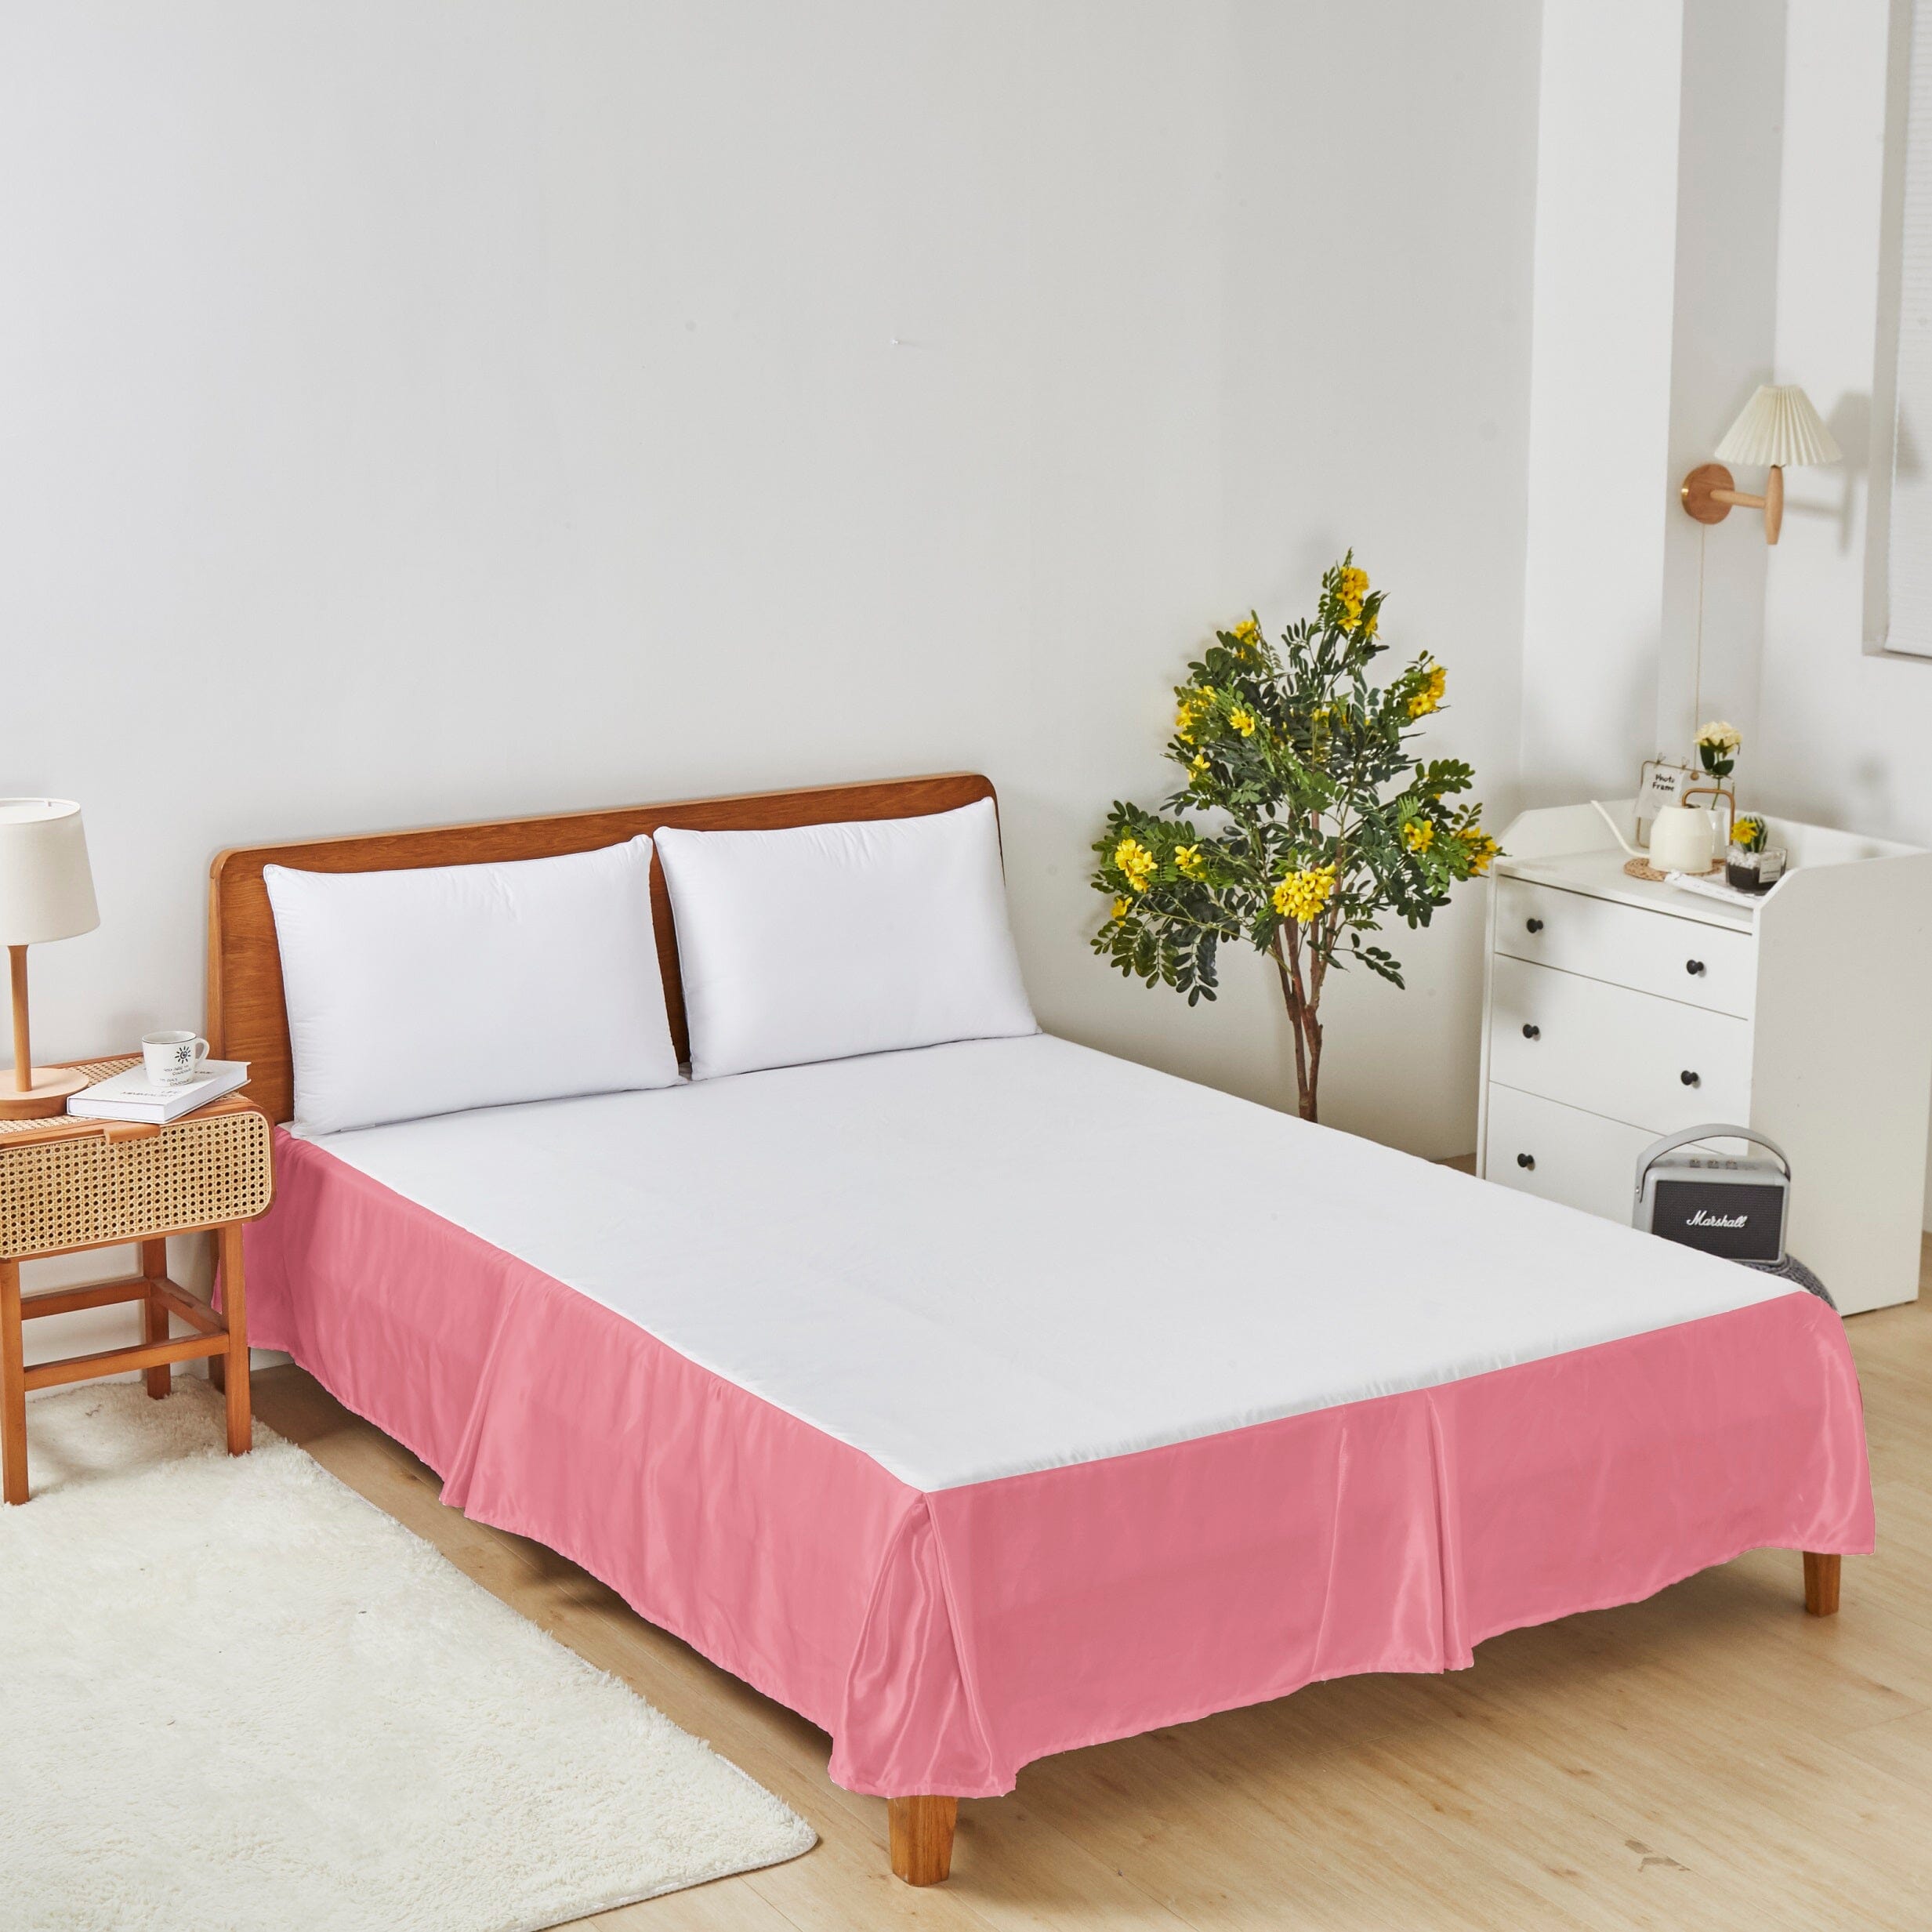 Tache Satin Pink Lustrous Sweet Victorian Tailored Platform 14" Bed Skirt Dust Ruffle (MZ002) - Tache Home Fashion